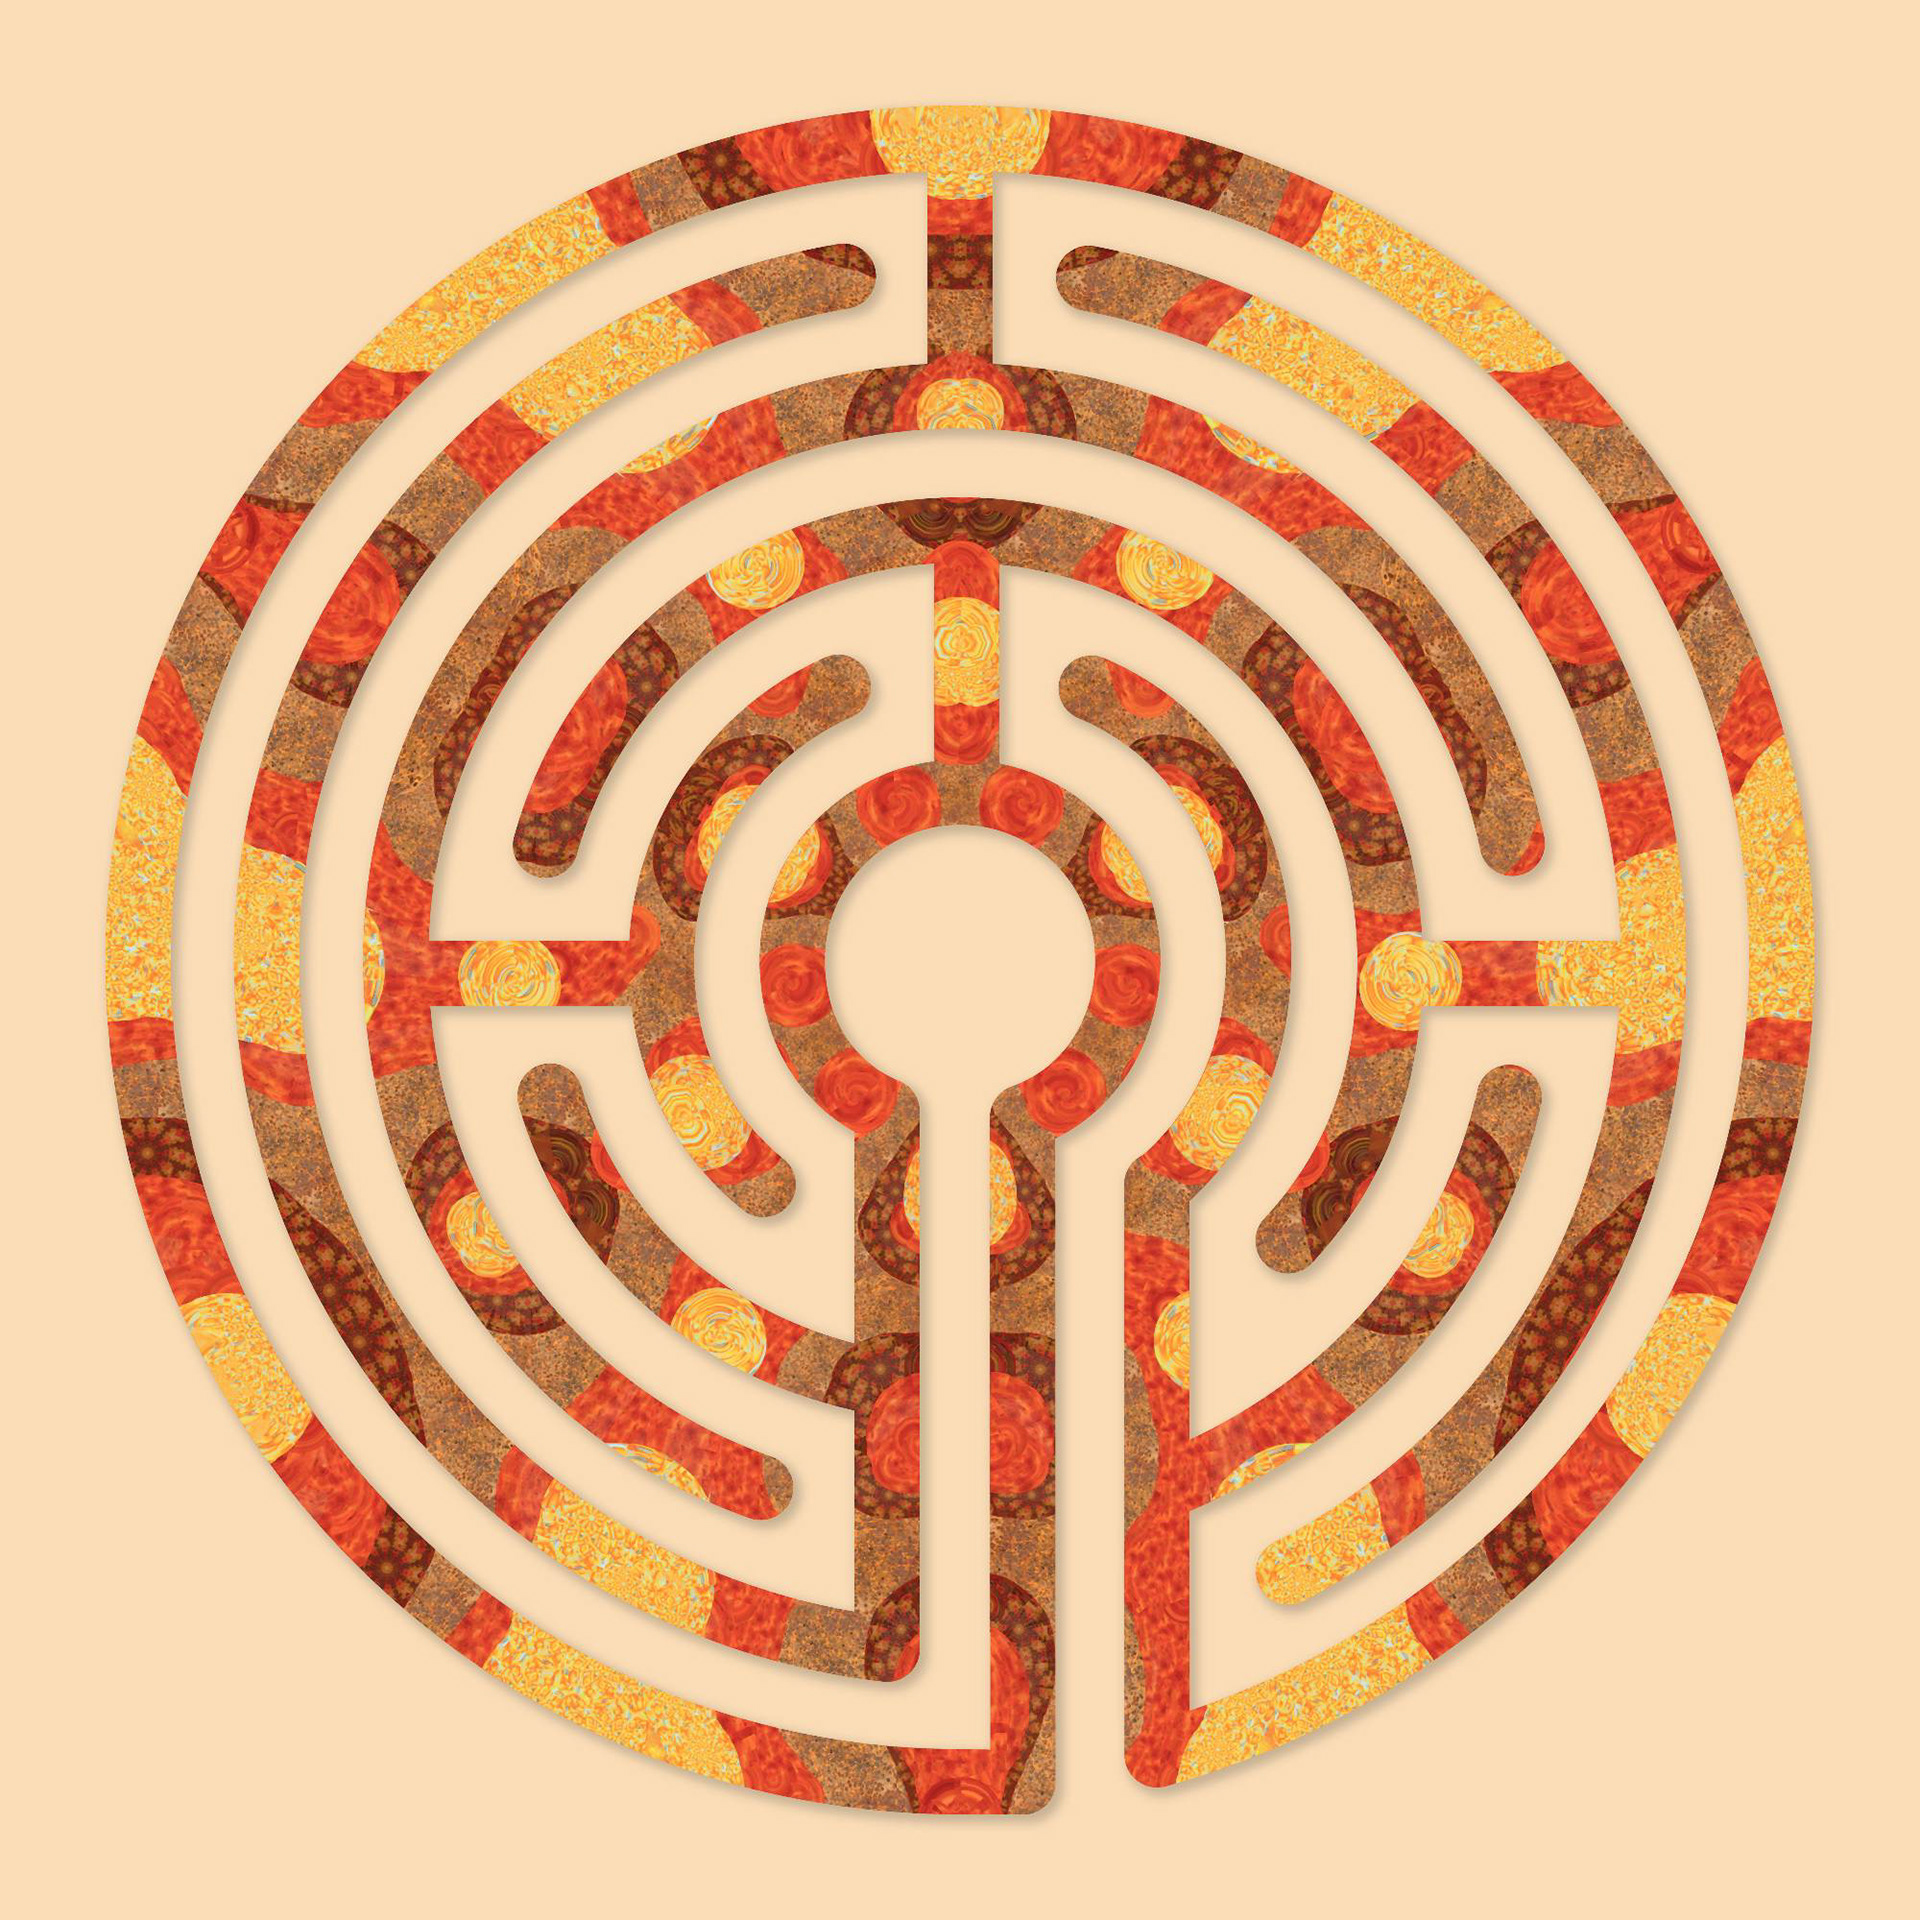 The Labyrinth Art Project - 5 Circuit Labyrinths.